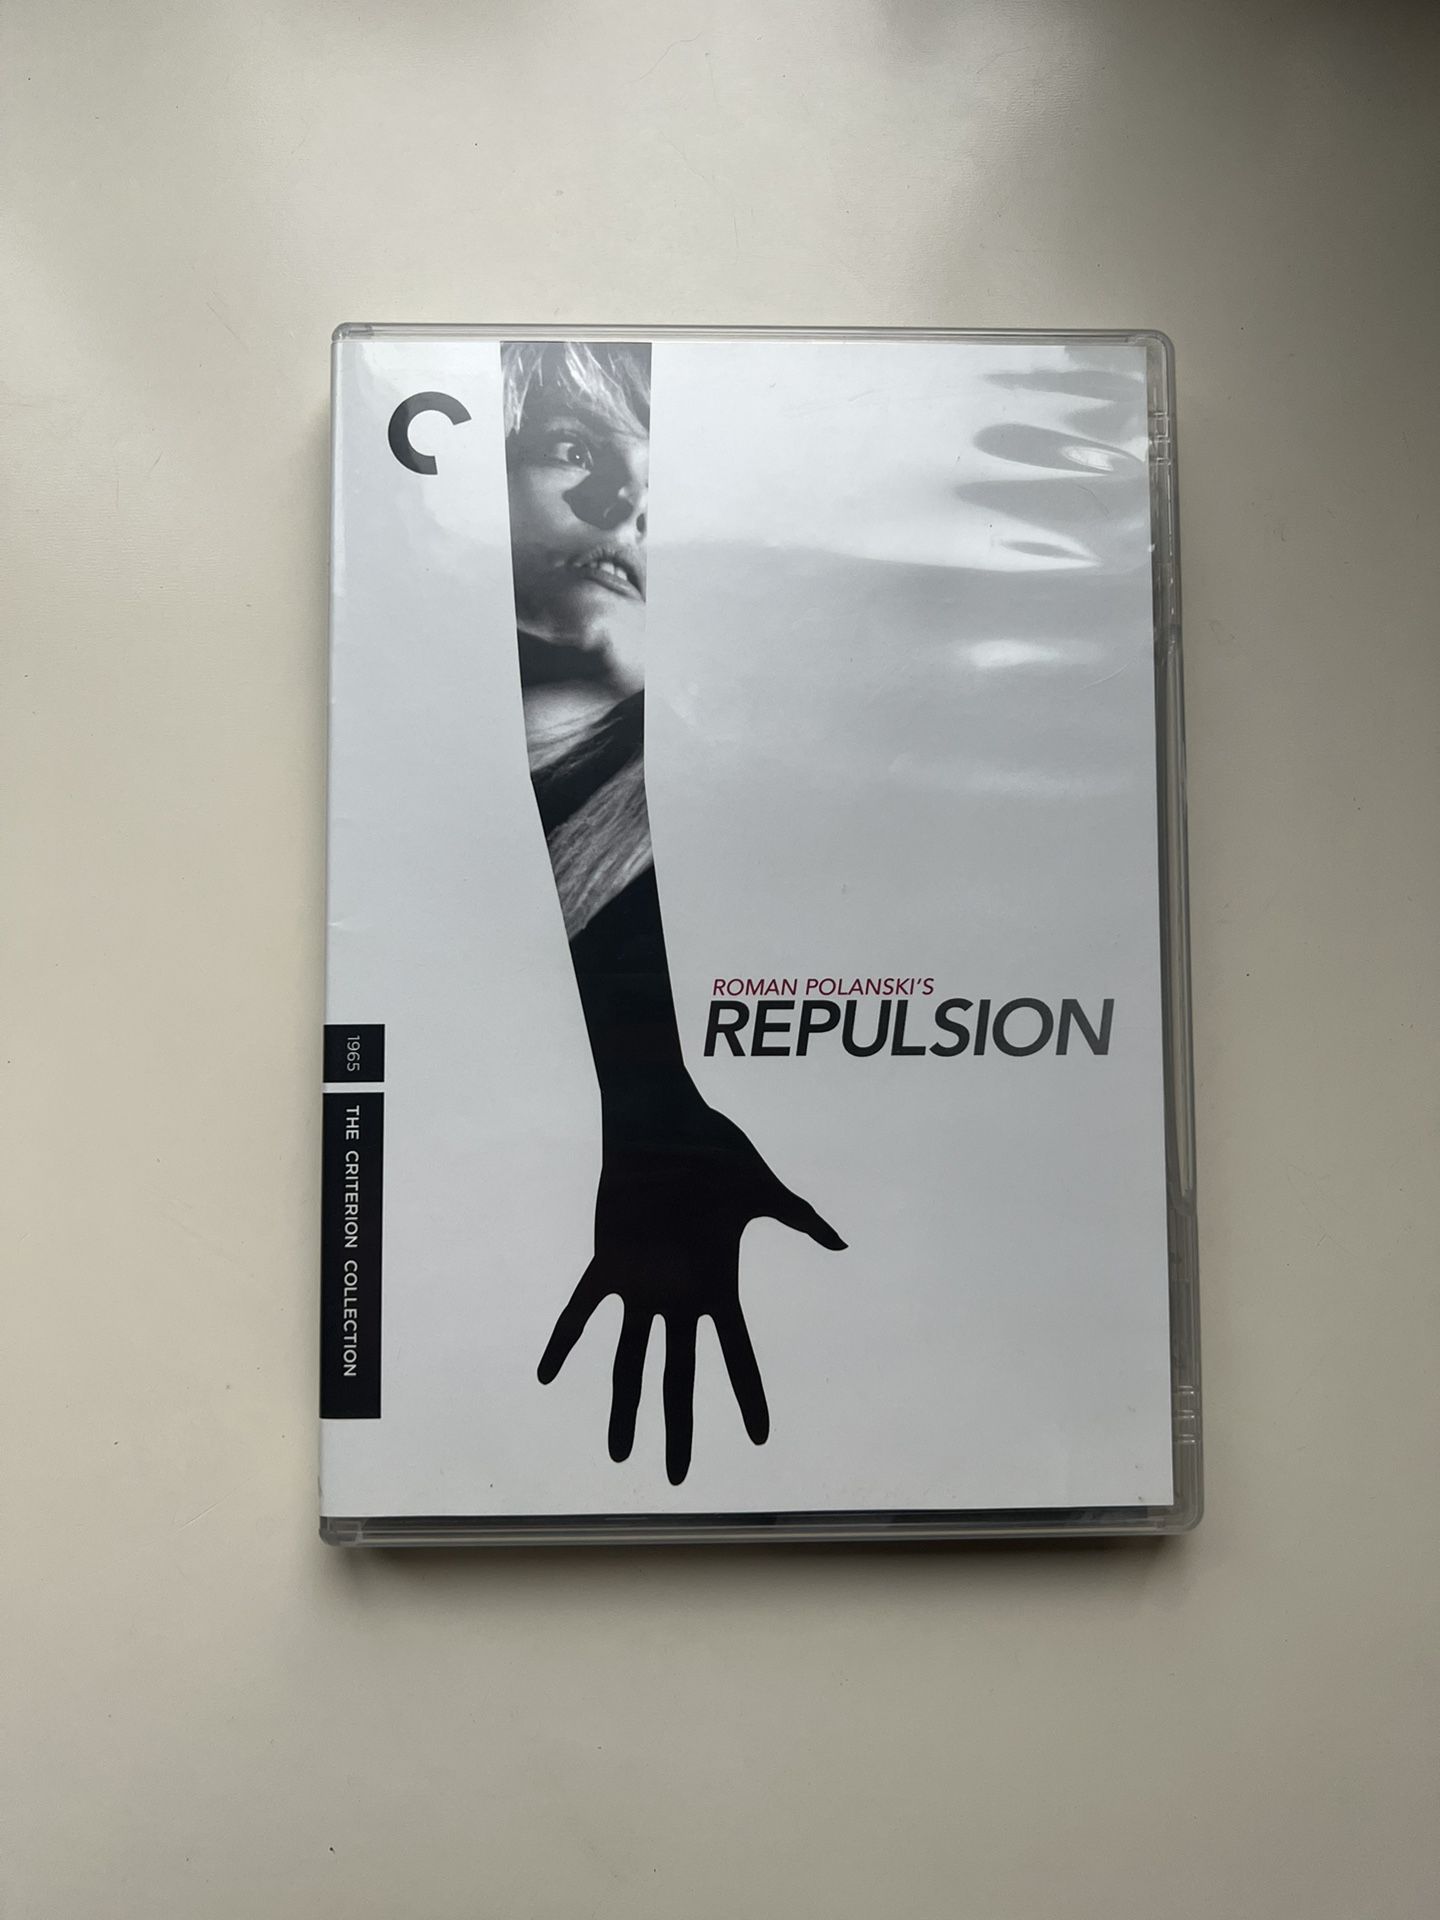 Roman Polanski’s Repulsion The Criterion Collection DVD 1965 / 2009 Horror